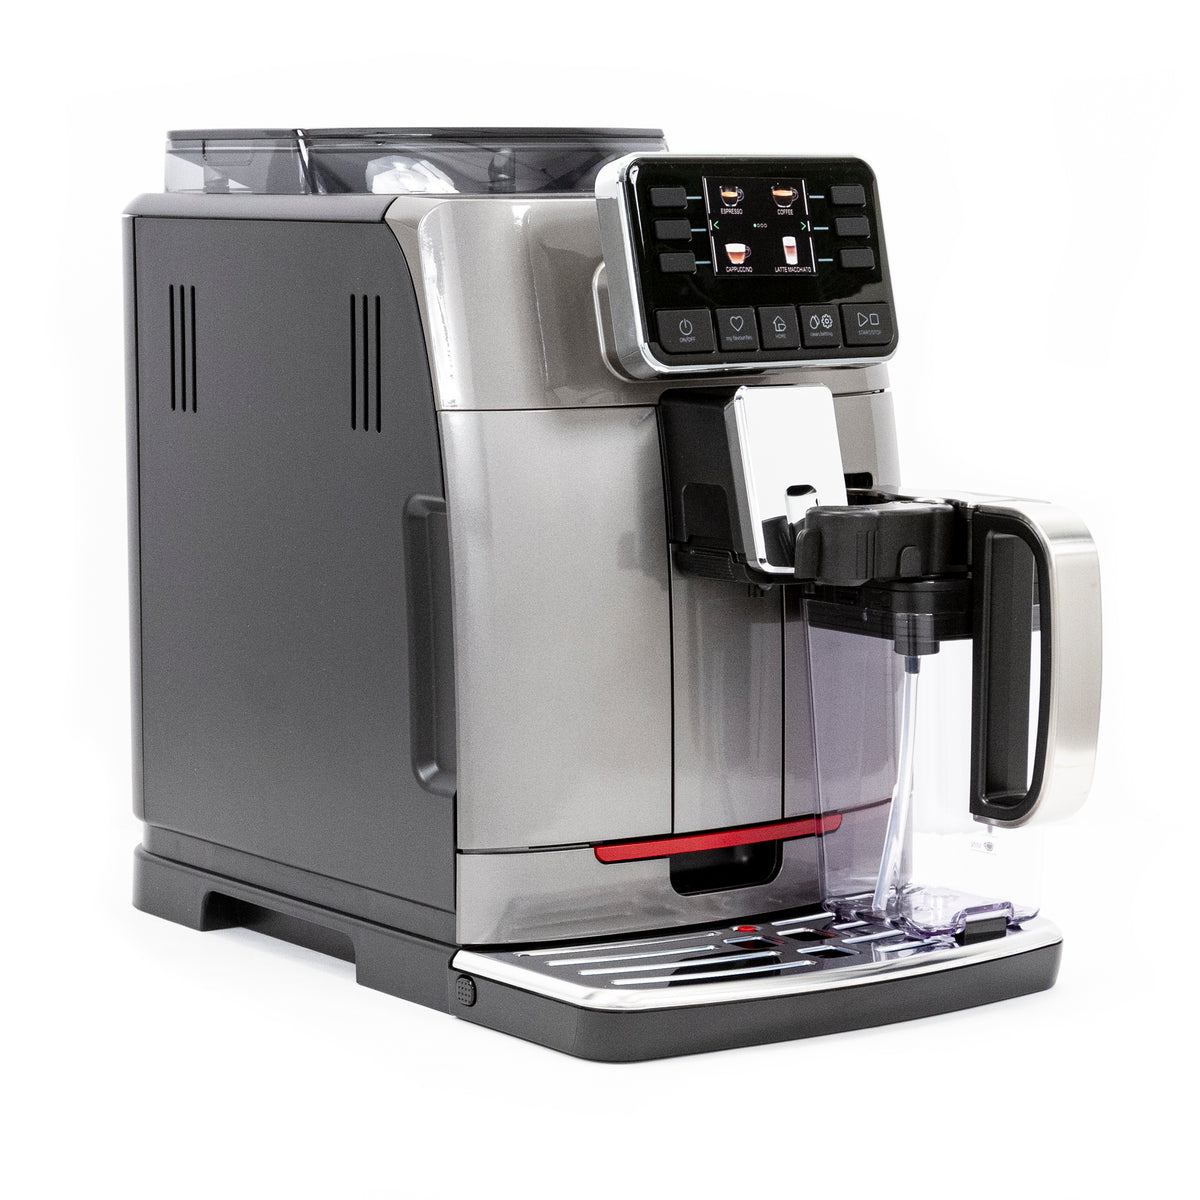 Fully automatic espresso machines